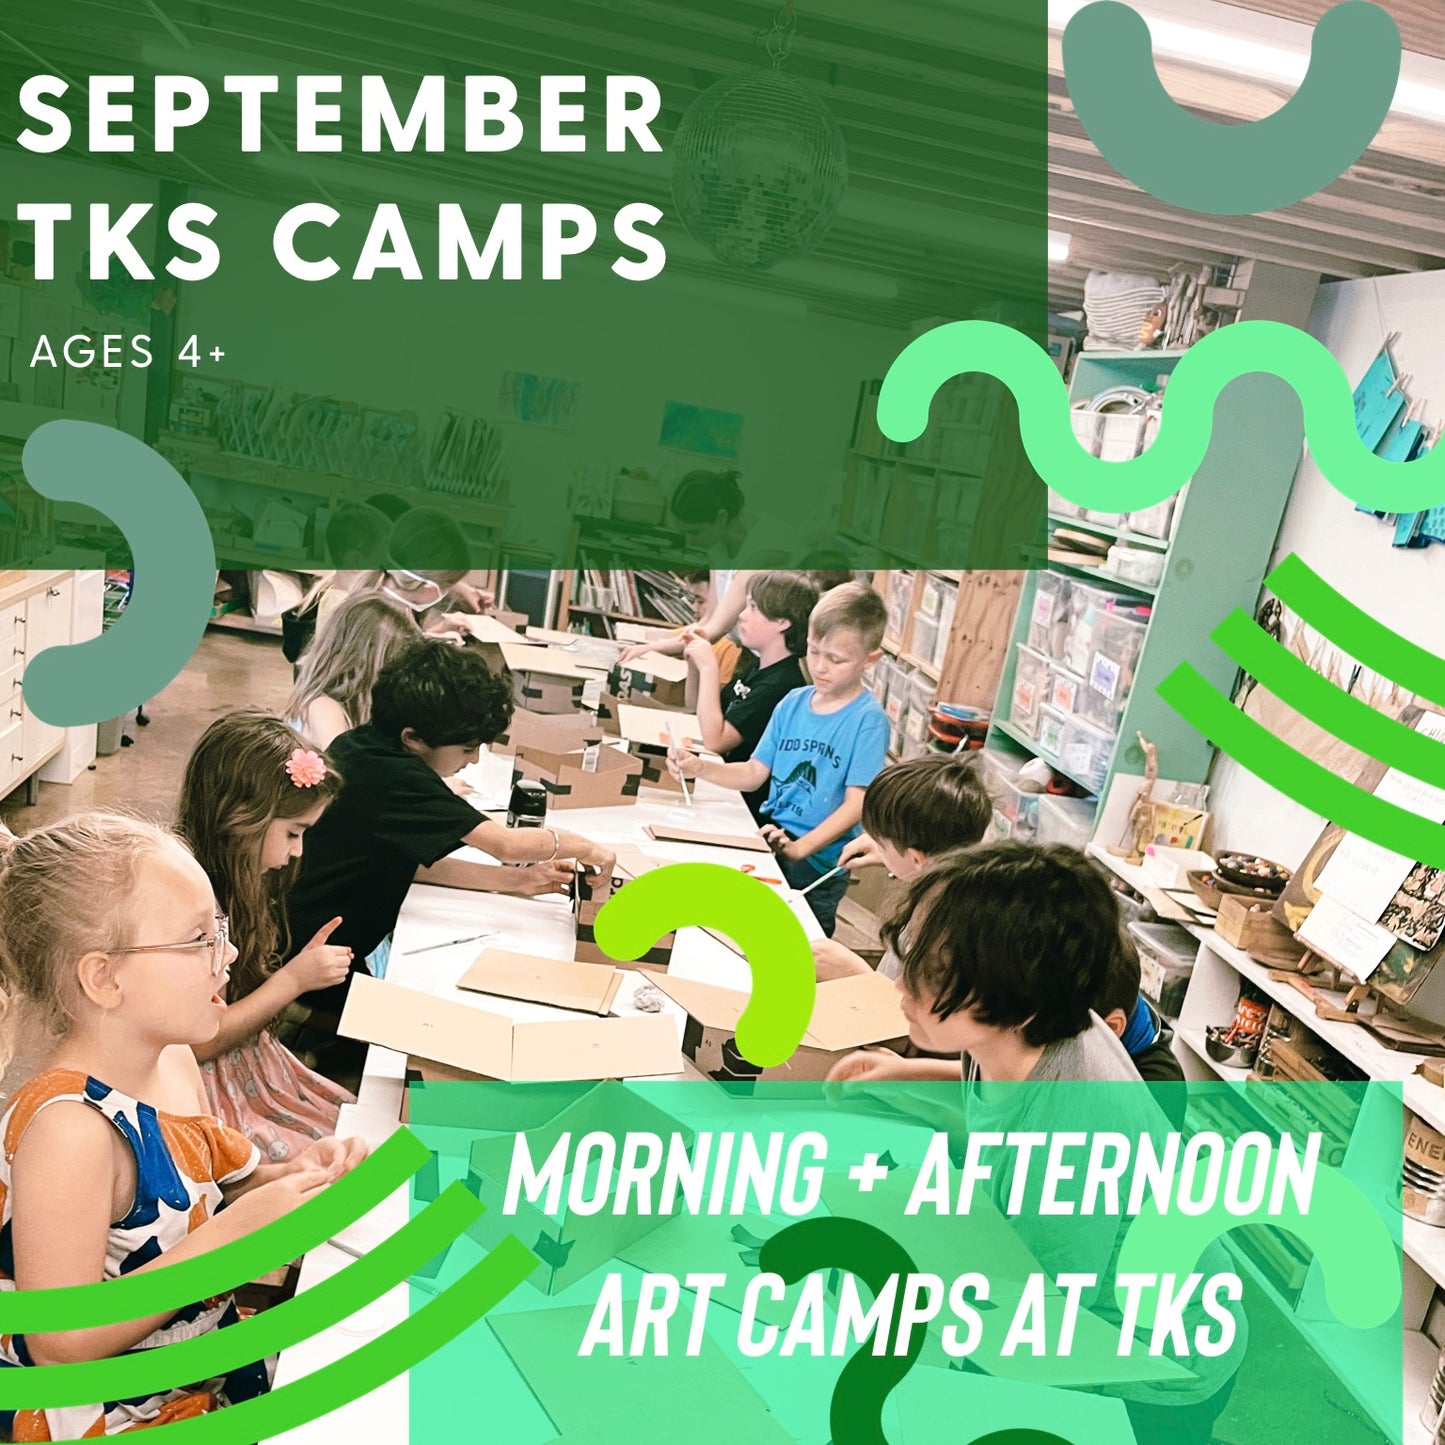 Sept 25-29 Kessler School Art Camps